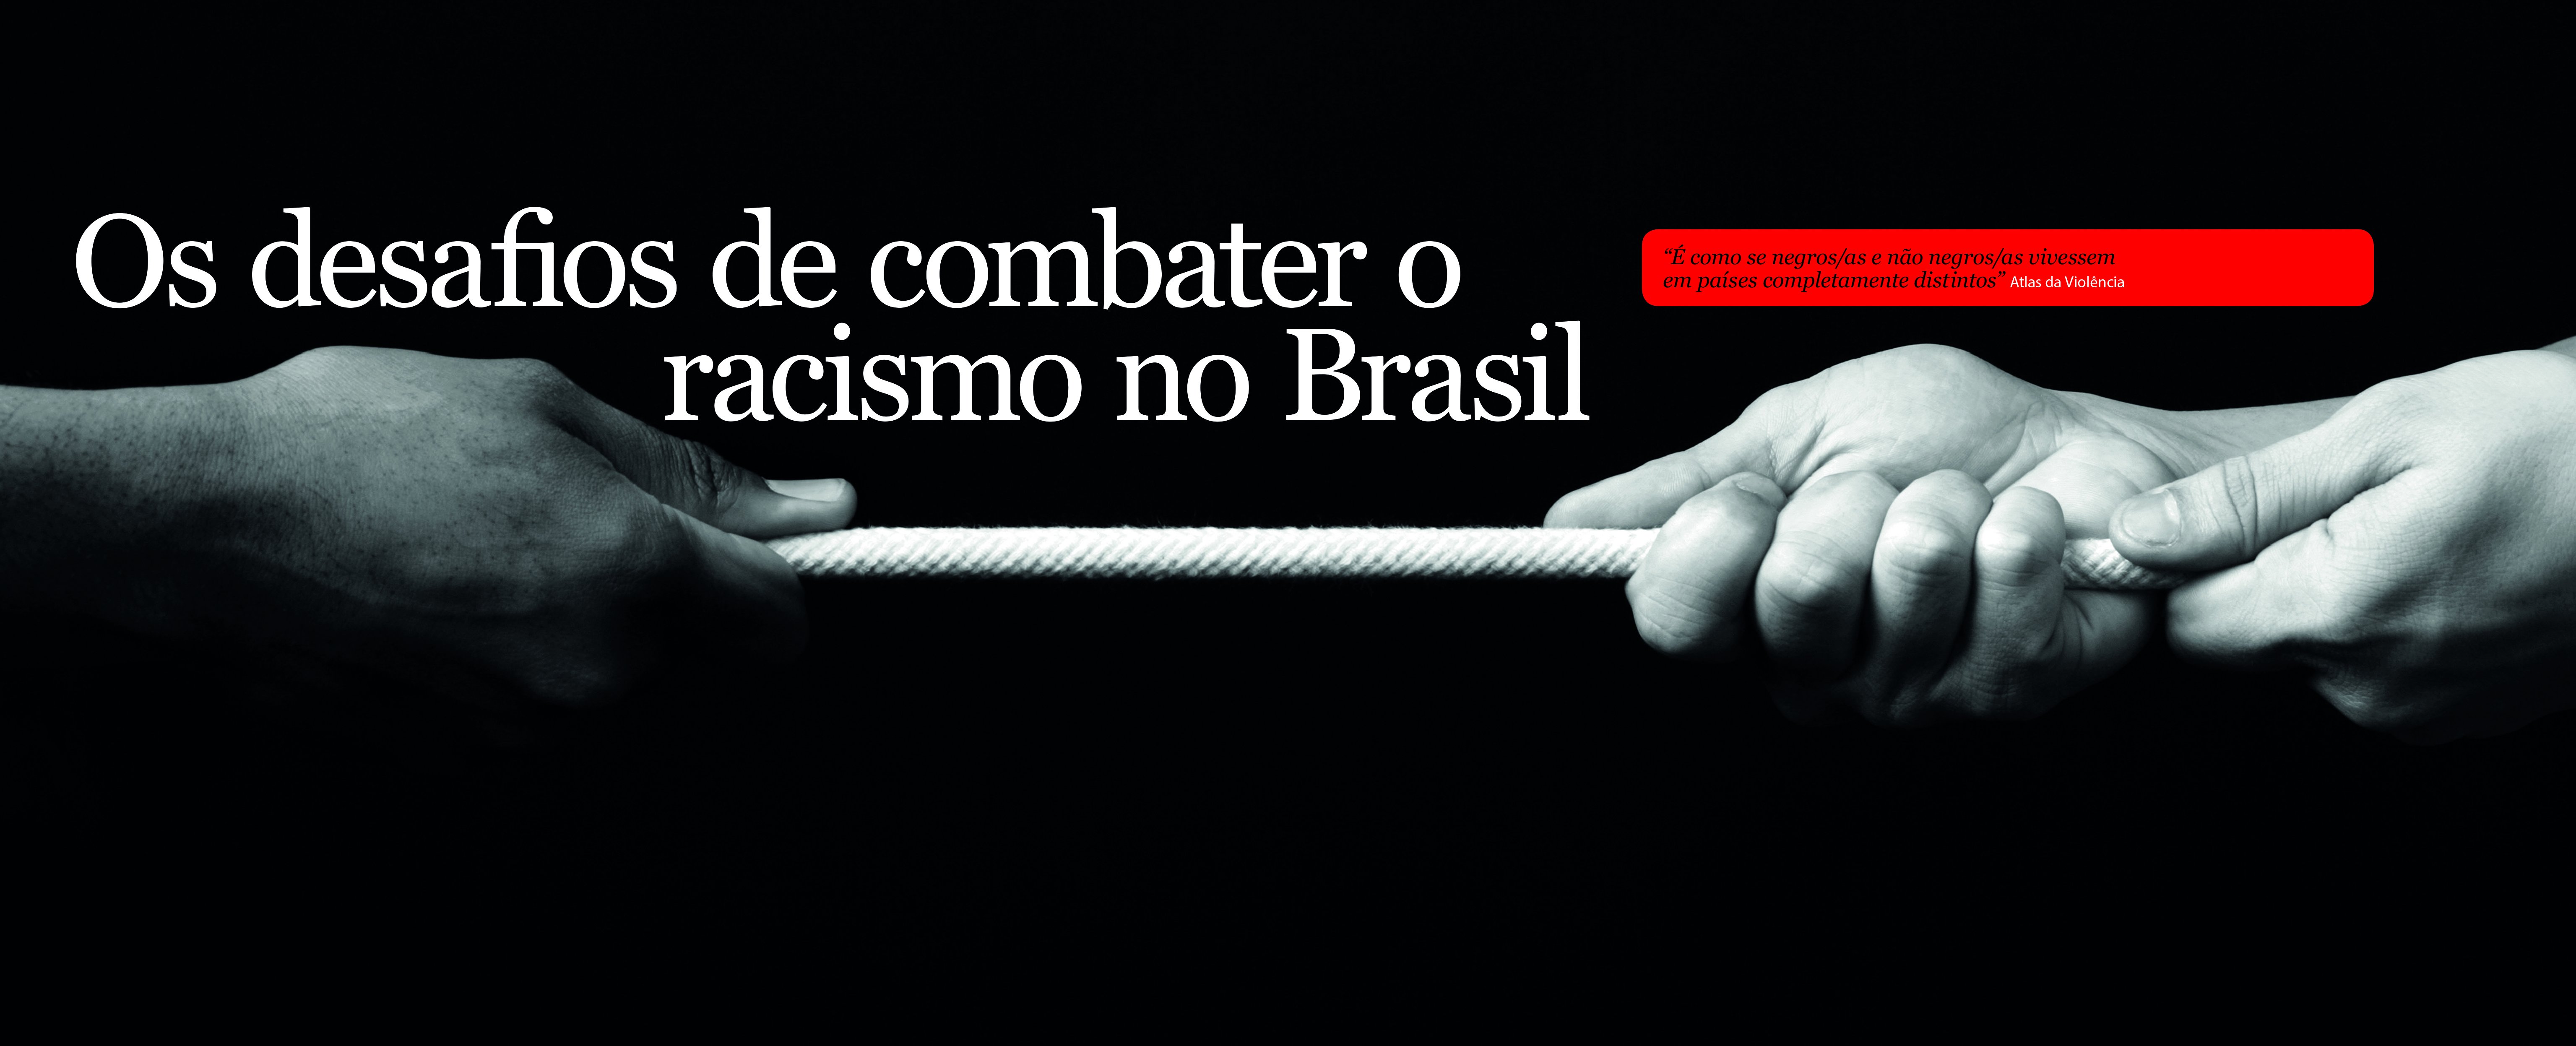 Os desafios de combater o racismo no Brasil